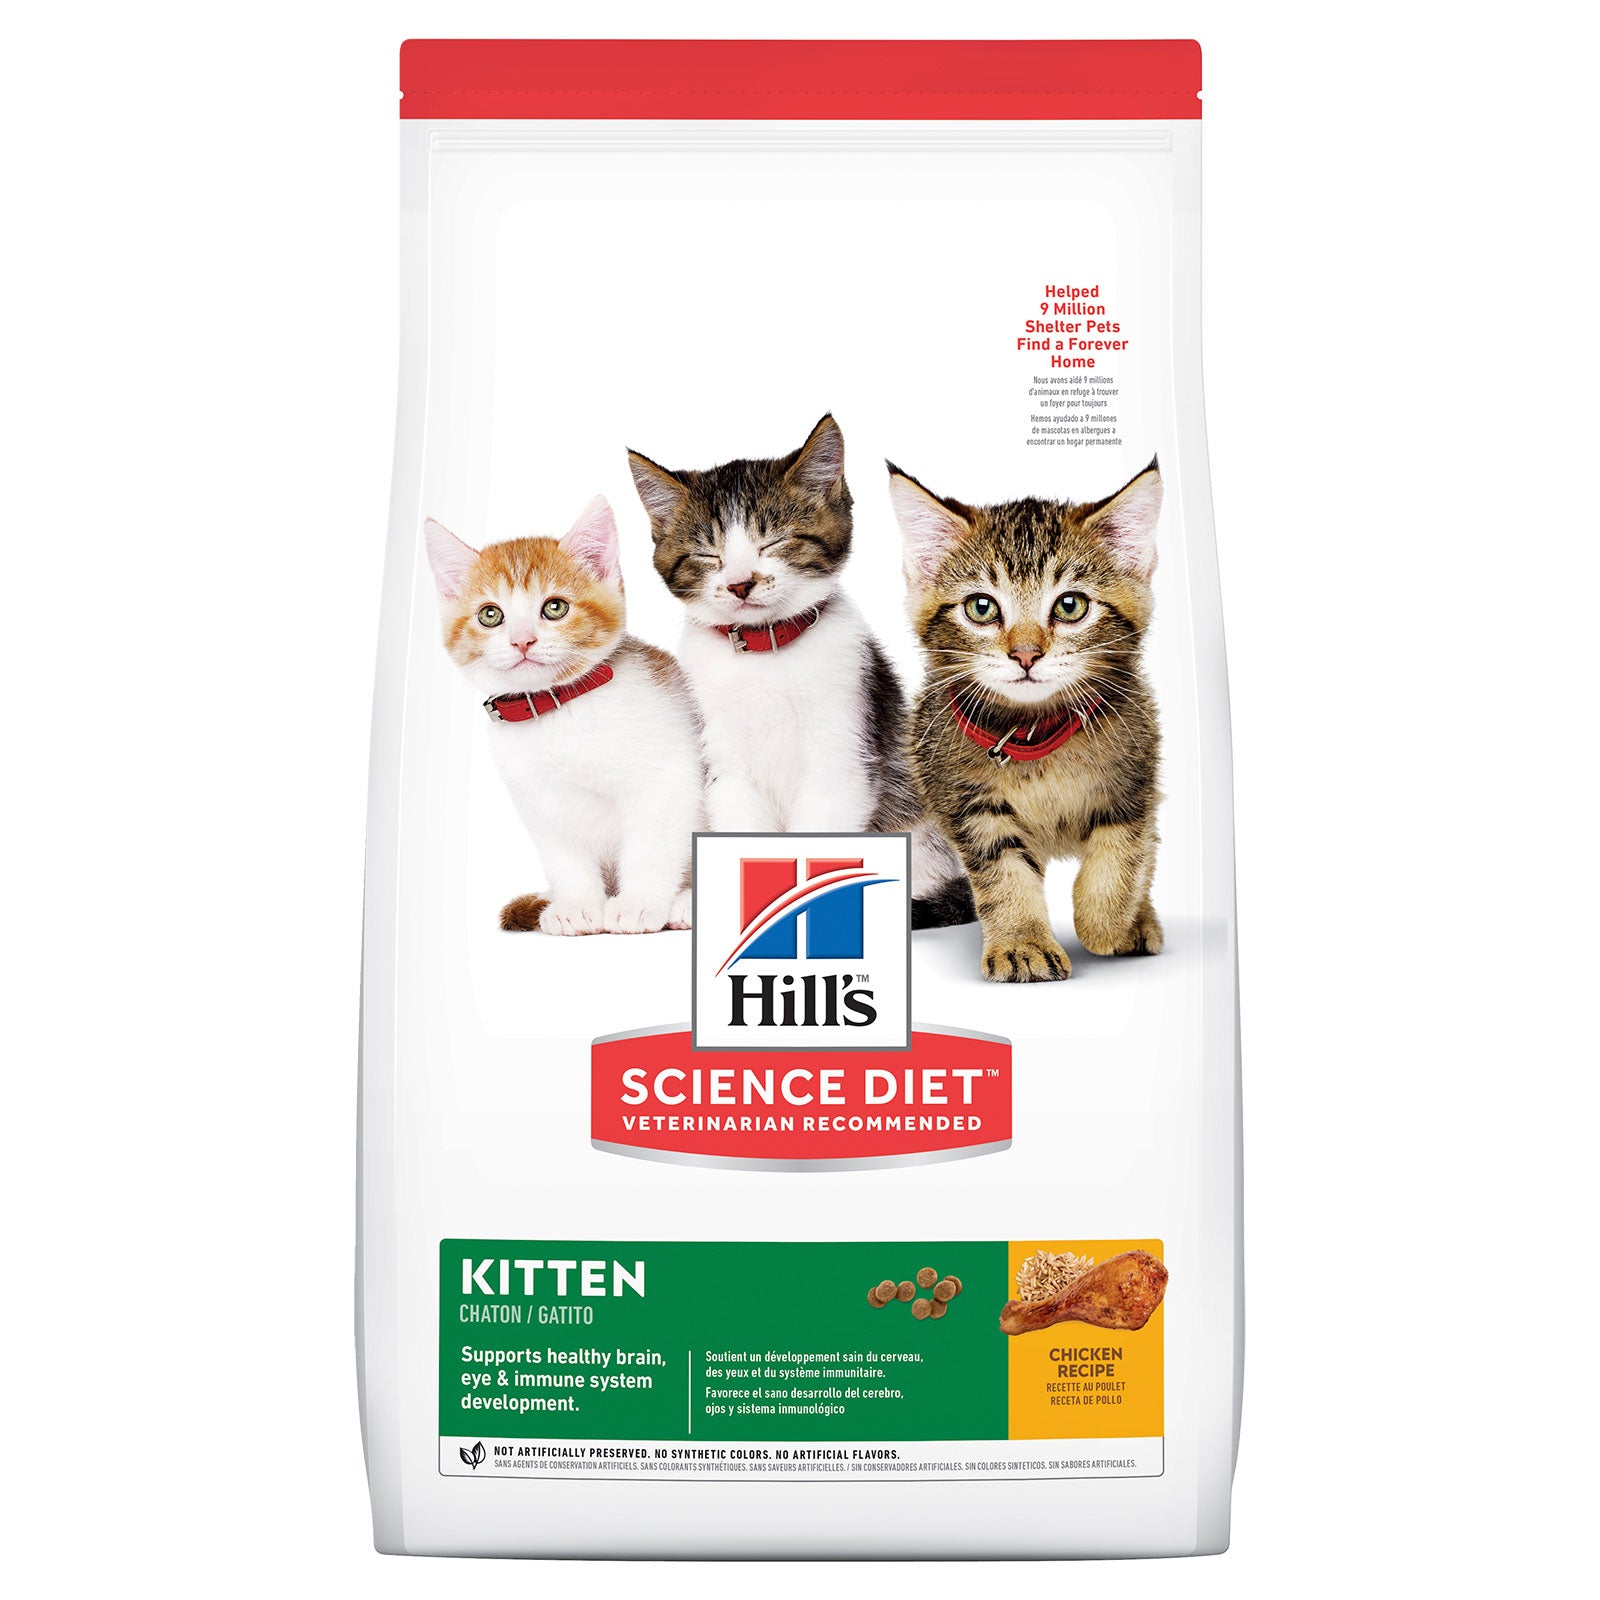 Hill's Science Diet Cat Food Kitten